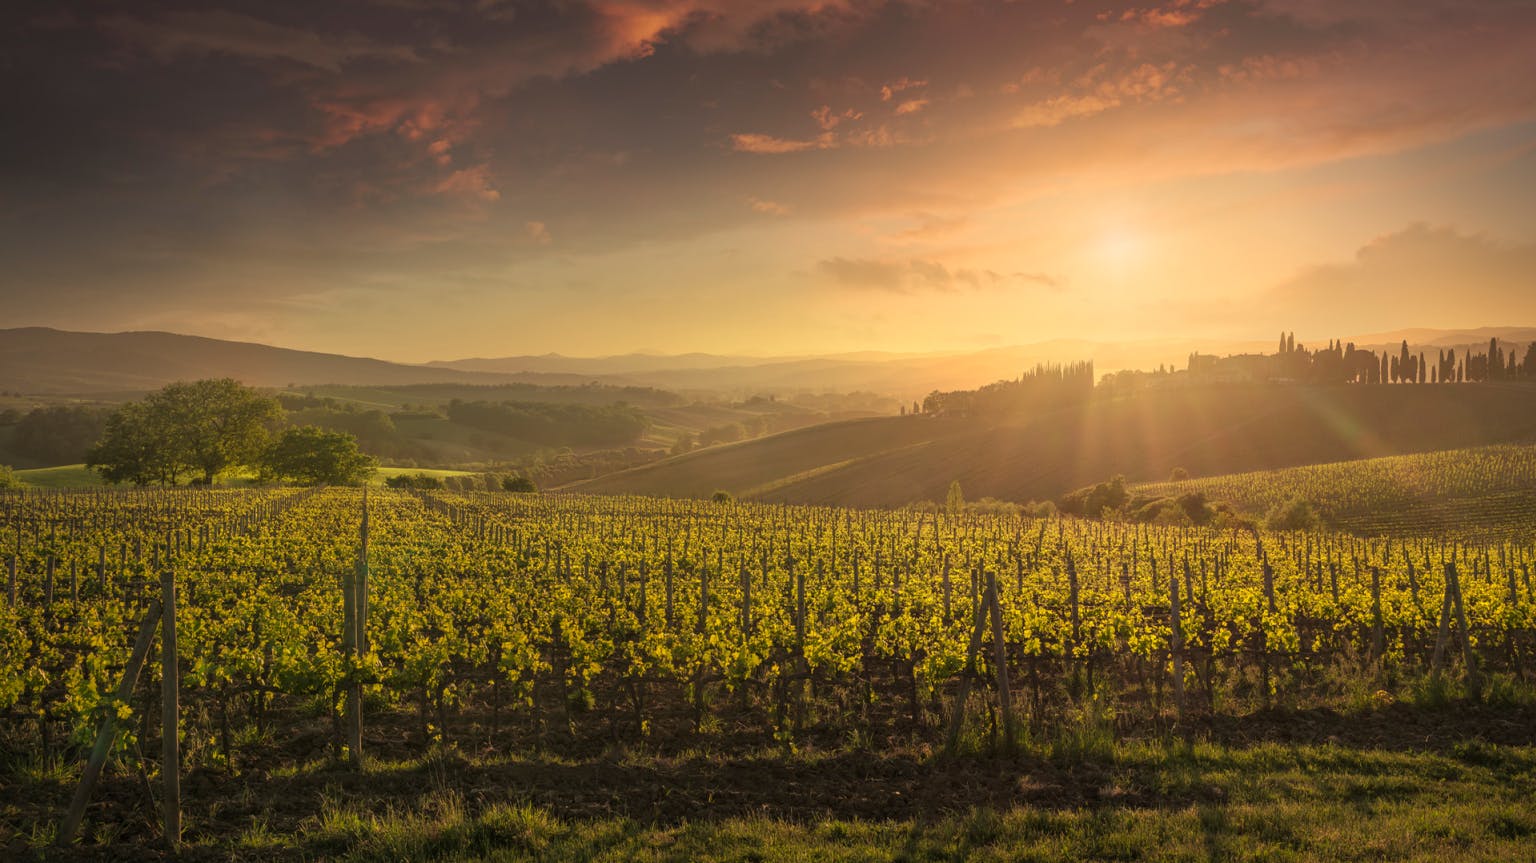 Montalcino vineyards at sunset. Tuscany region. iStock